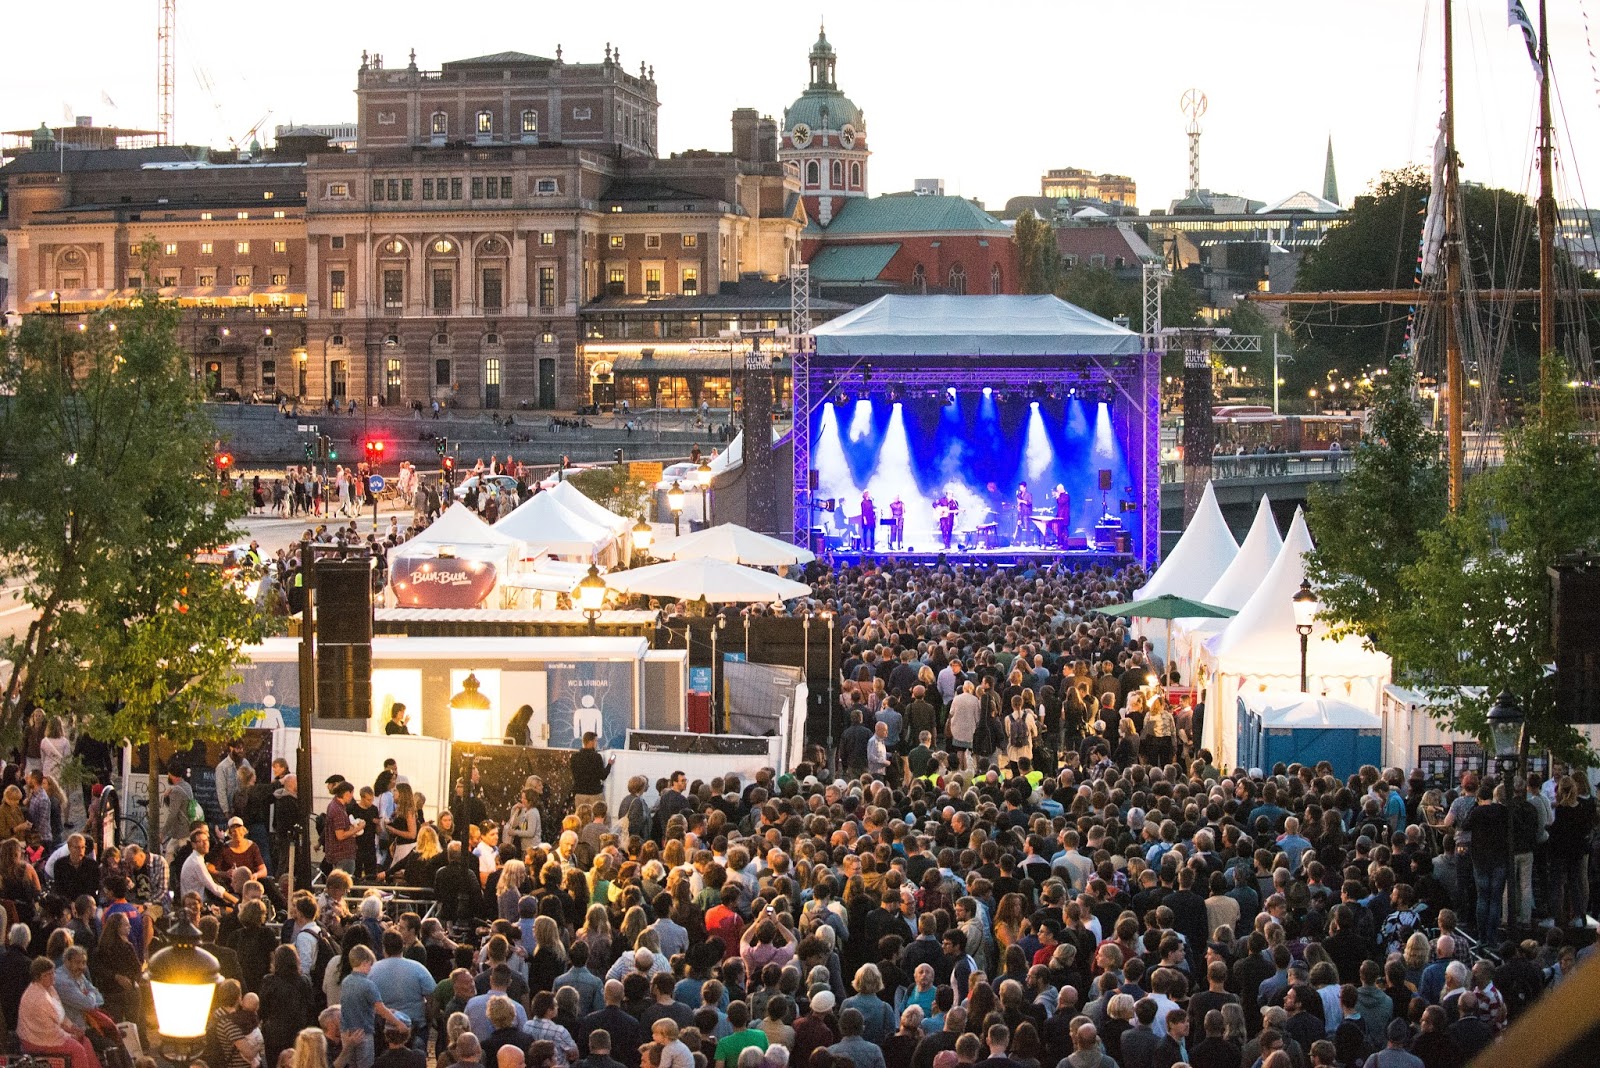 Stockholm Cultural Festival (Kulturfestivalen)